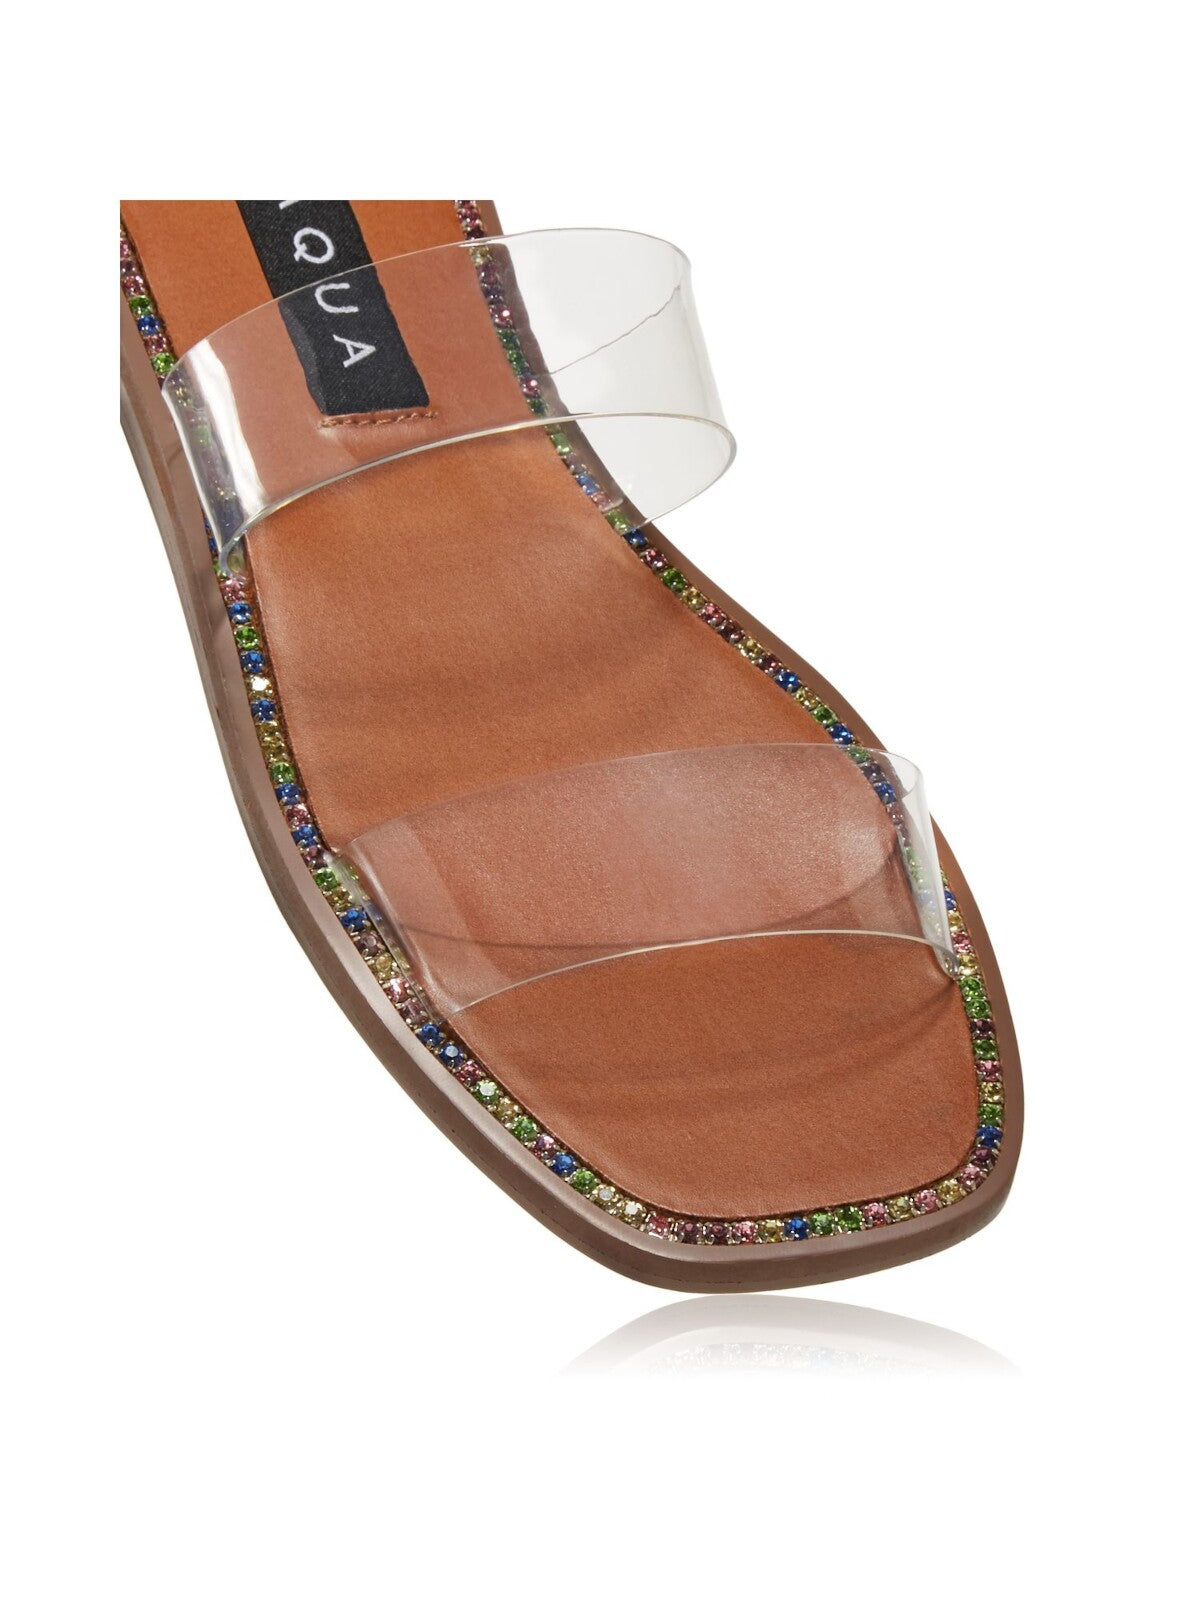 AQUA Womens Brown Studded Rhinestone Glow Square Toe Slip On Slide Sandals Shoes M